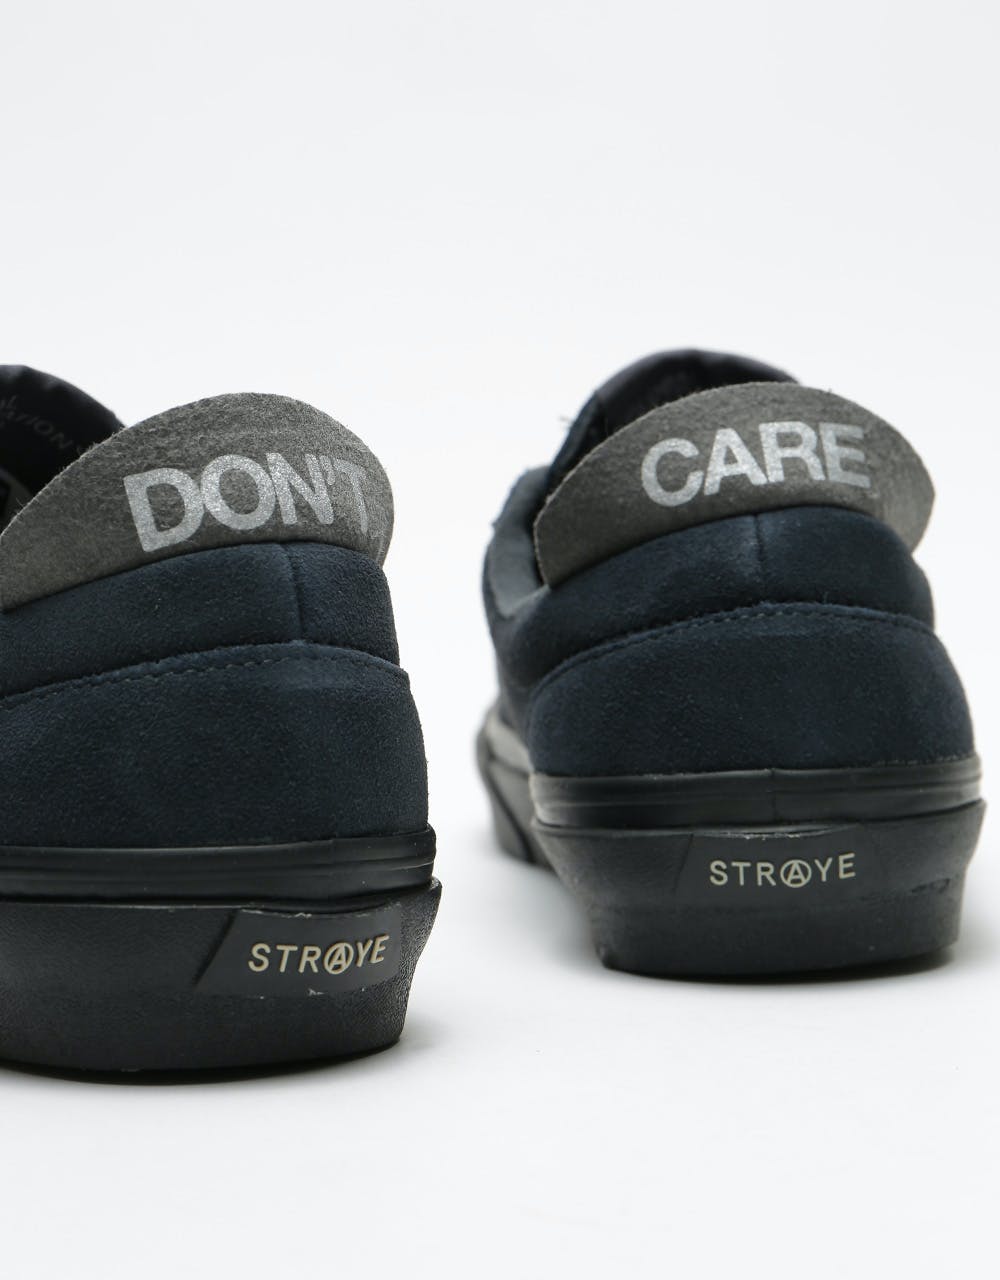 Straye Logan Skate Shoes - Carbon Suede